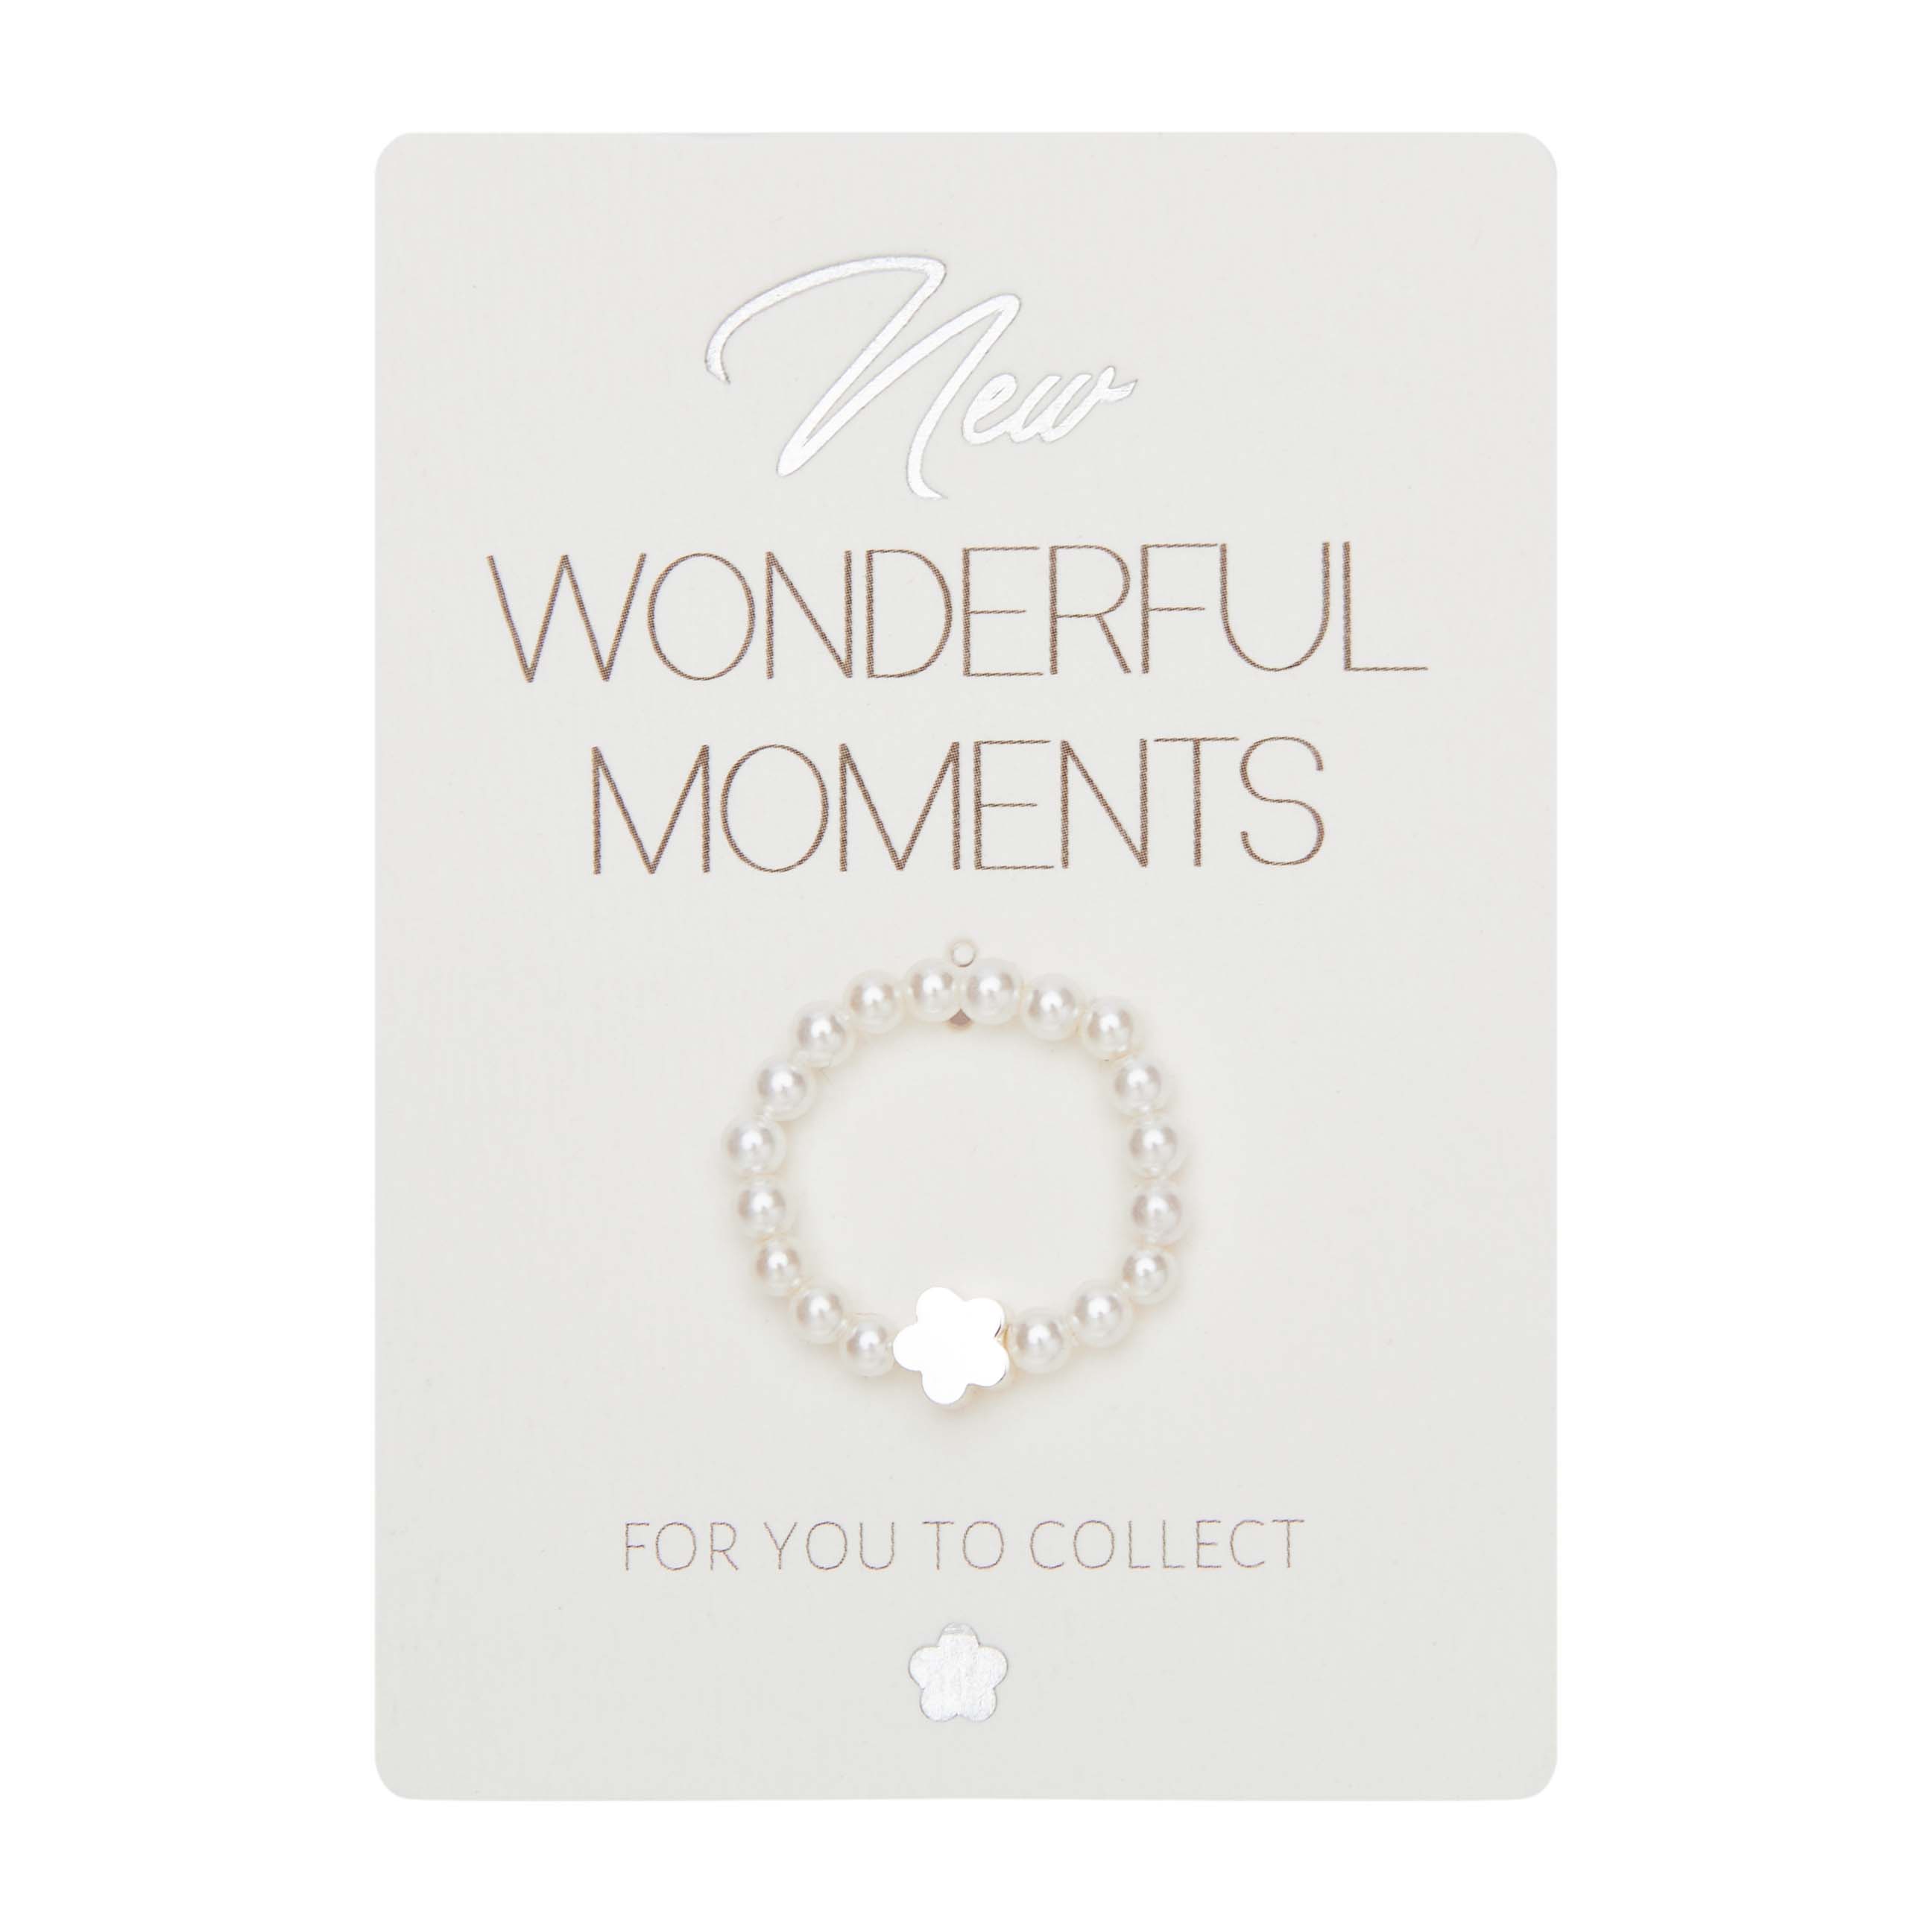 Display Ringe "New Wonderful Moments"